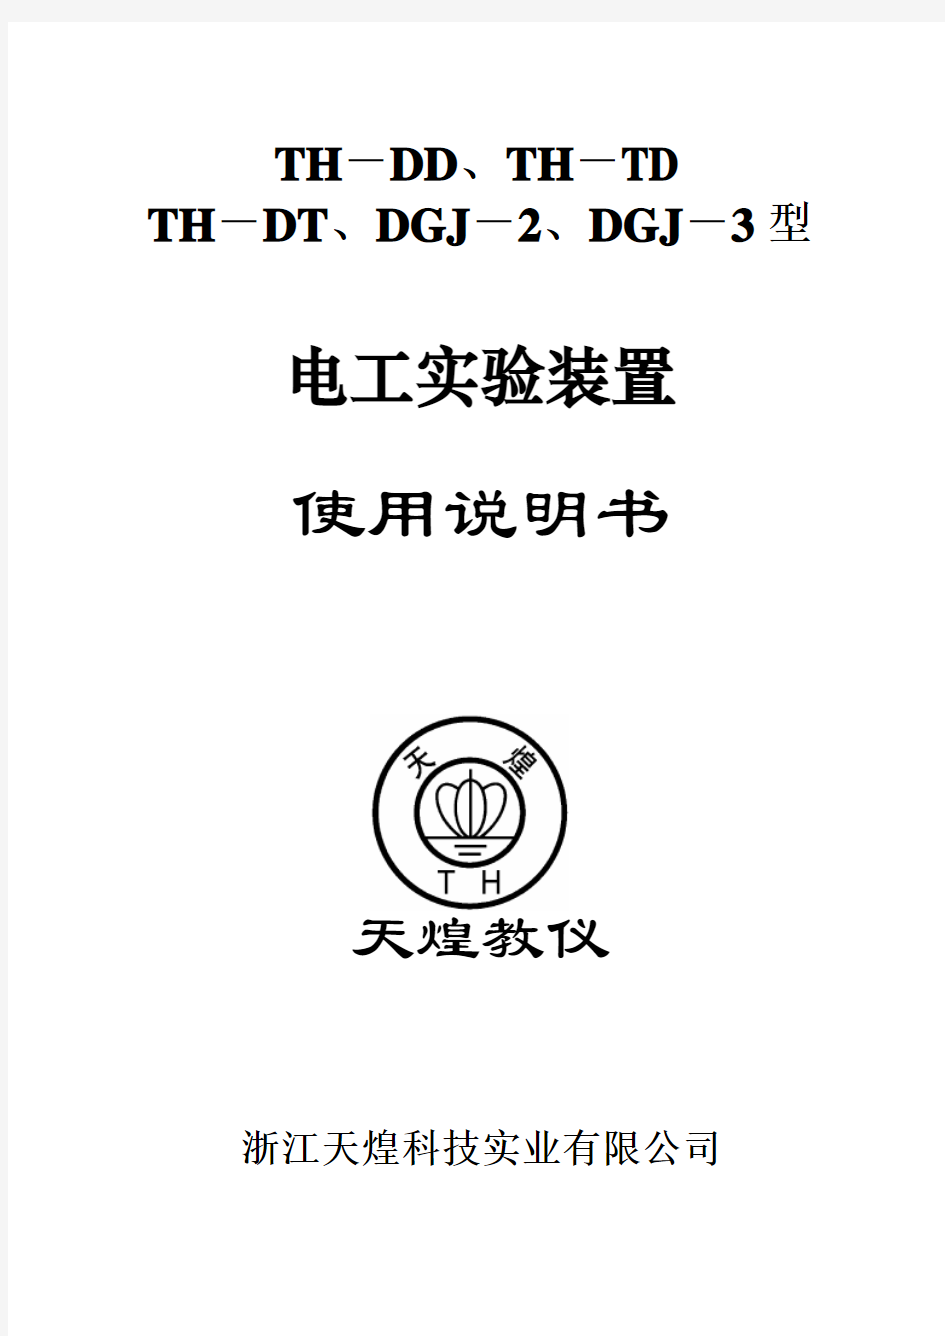 DGJ-2型电工电子实验台使用说明书3(DOC)